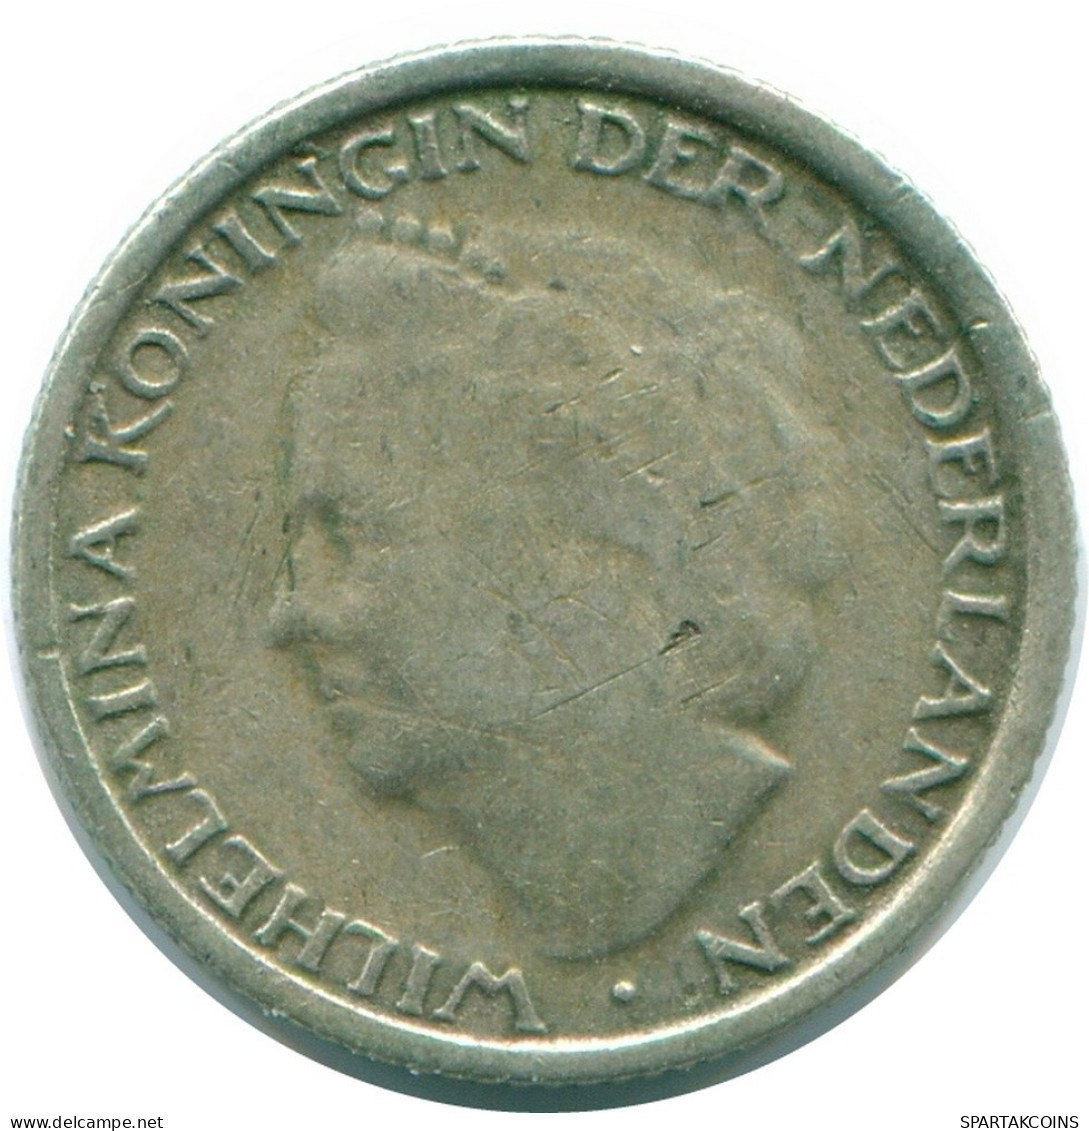 1/10 GULDEN 1948 CURACAO Netherlands SILVER Colonial Coin #NL12002.3.U.A - Curacao